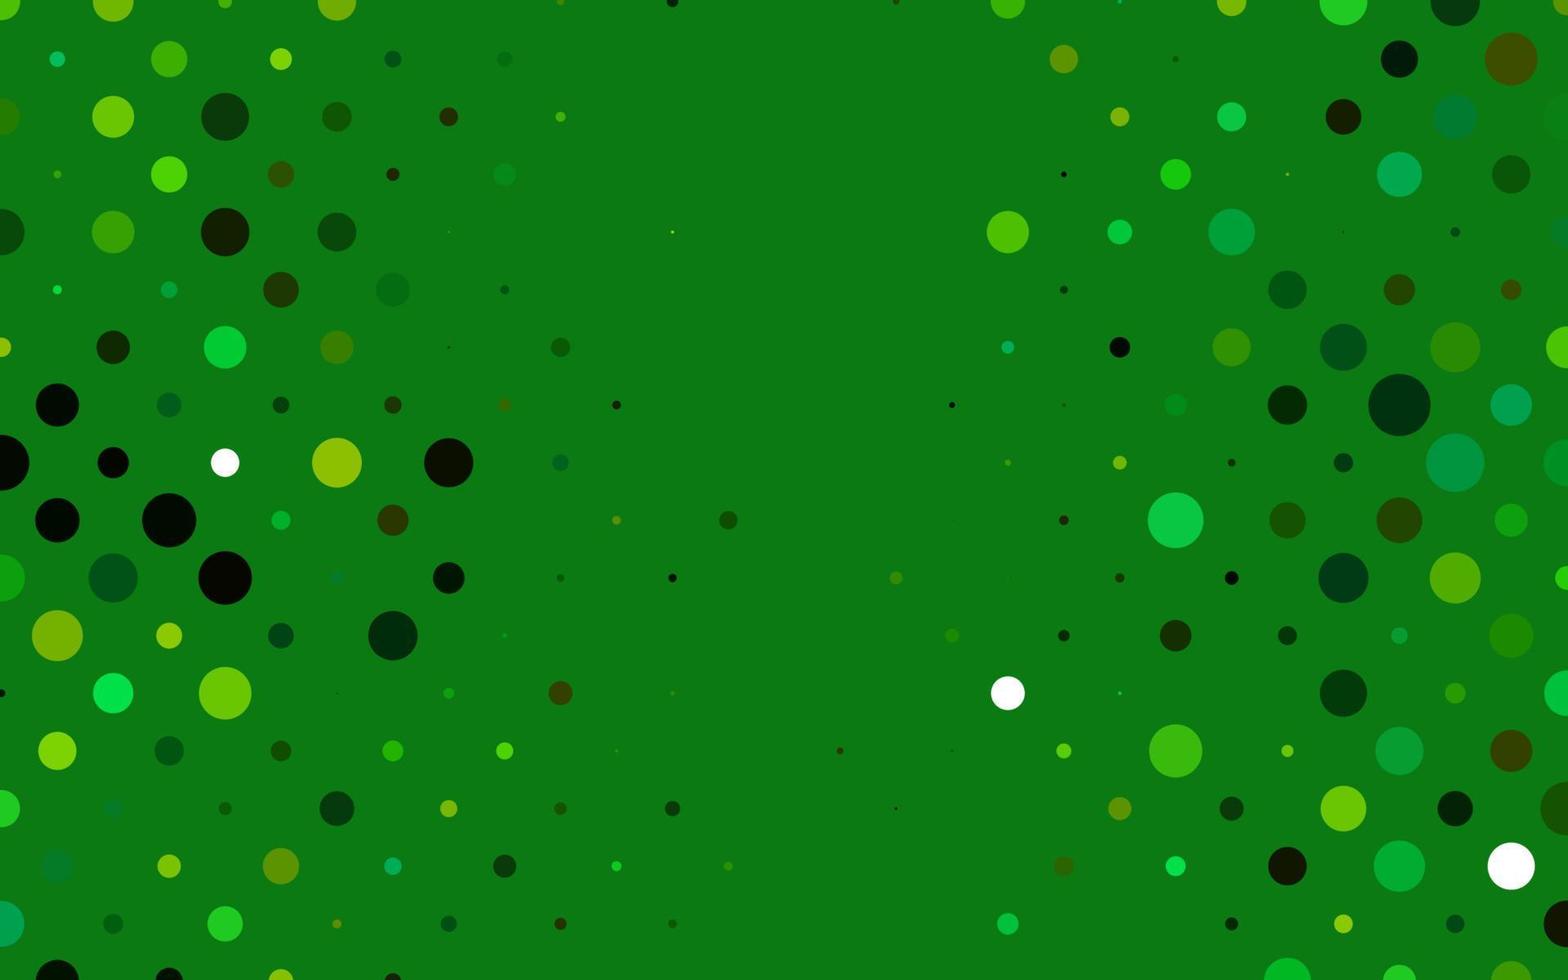 layout de vetor verde e amarelo claro com formas de círculo.